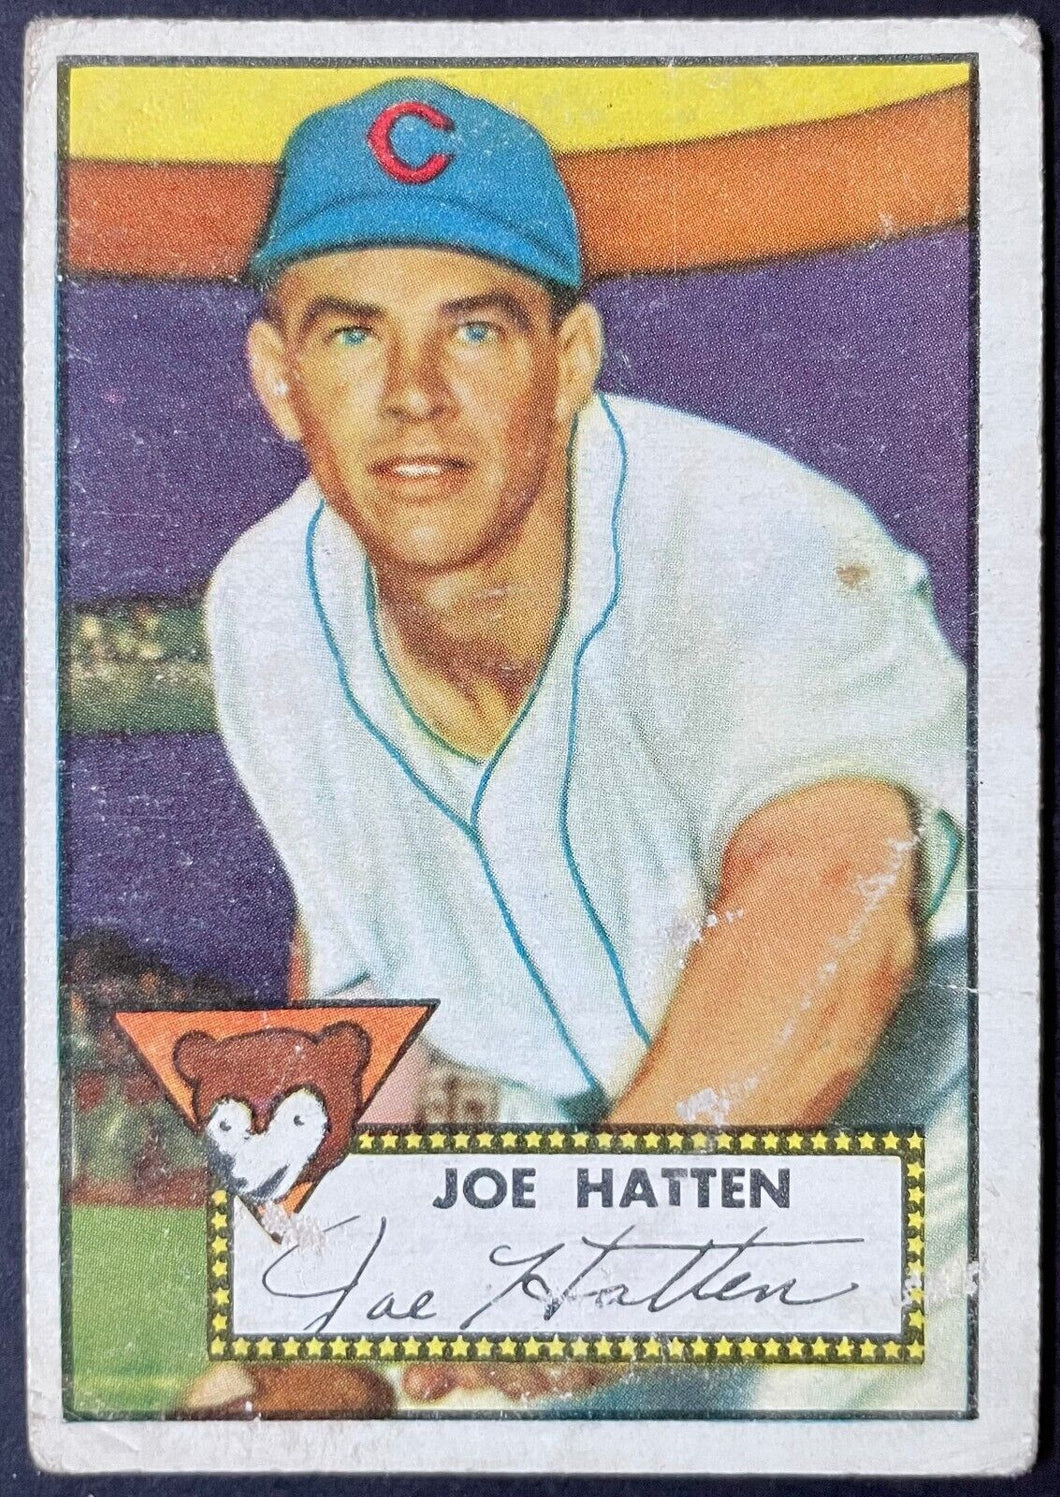 1952 Topps Baseball Joe Hatten #194 Chicago Cubs MLB Card Vintage